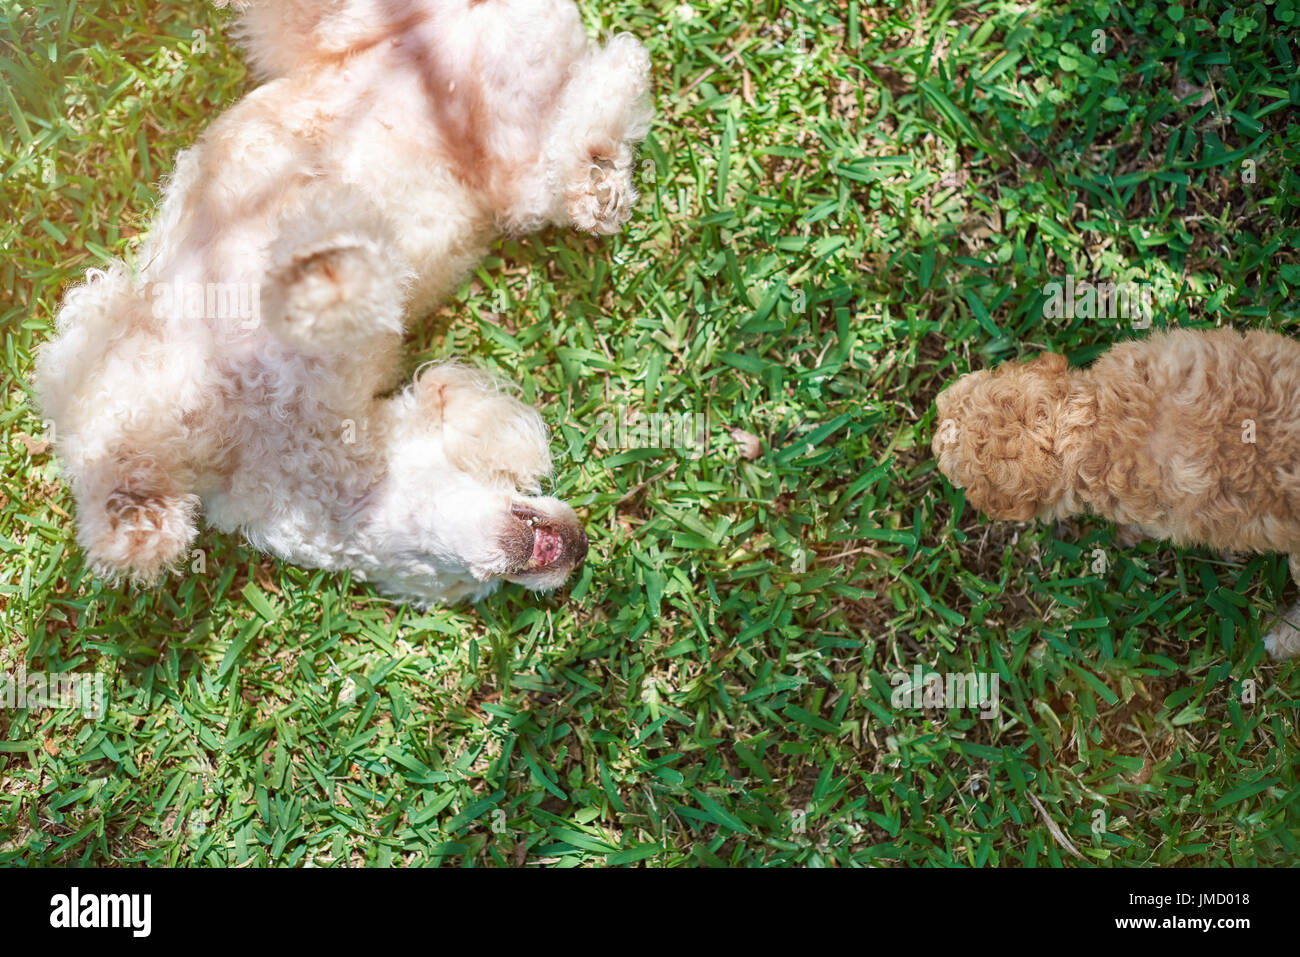 Enjoying freedom dogs laying on green grass. Stock Photo